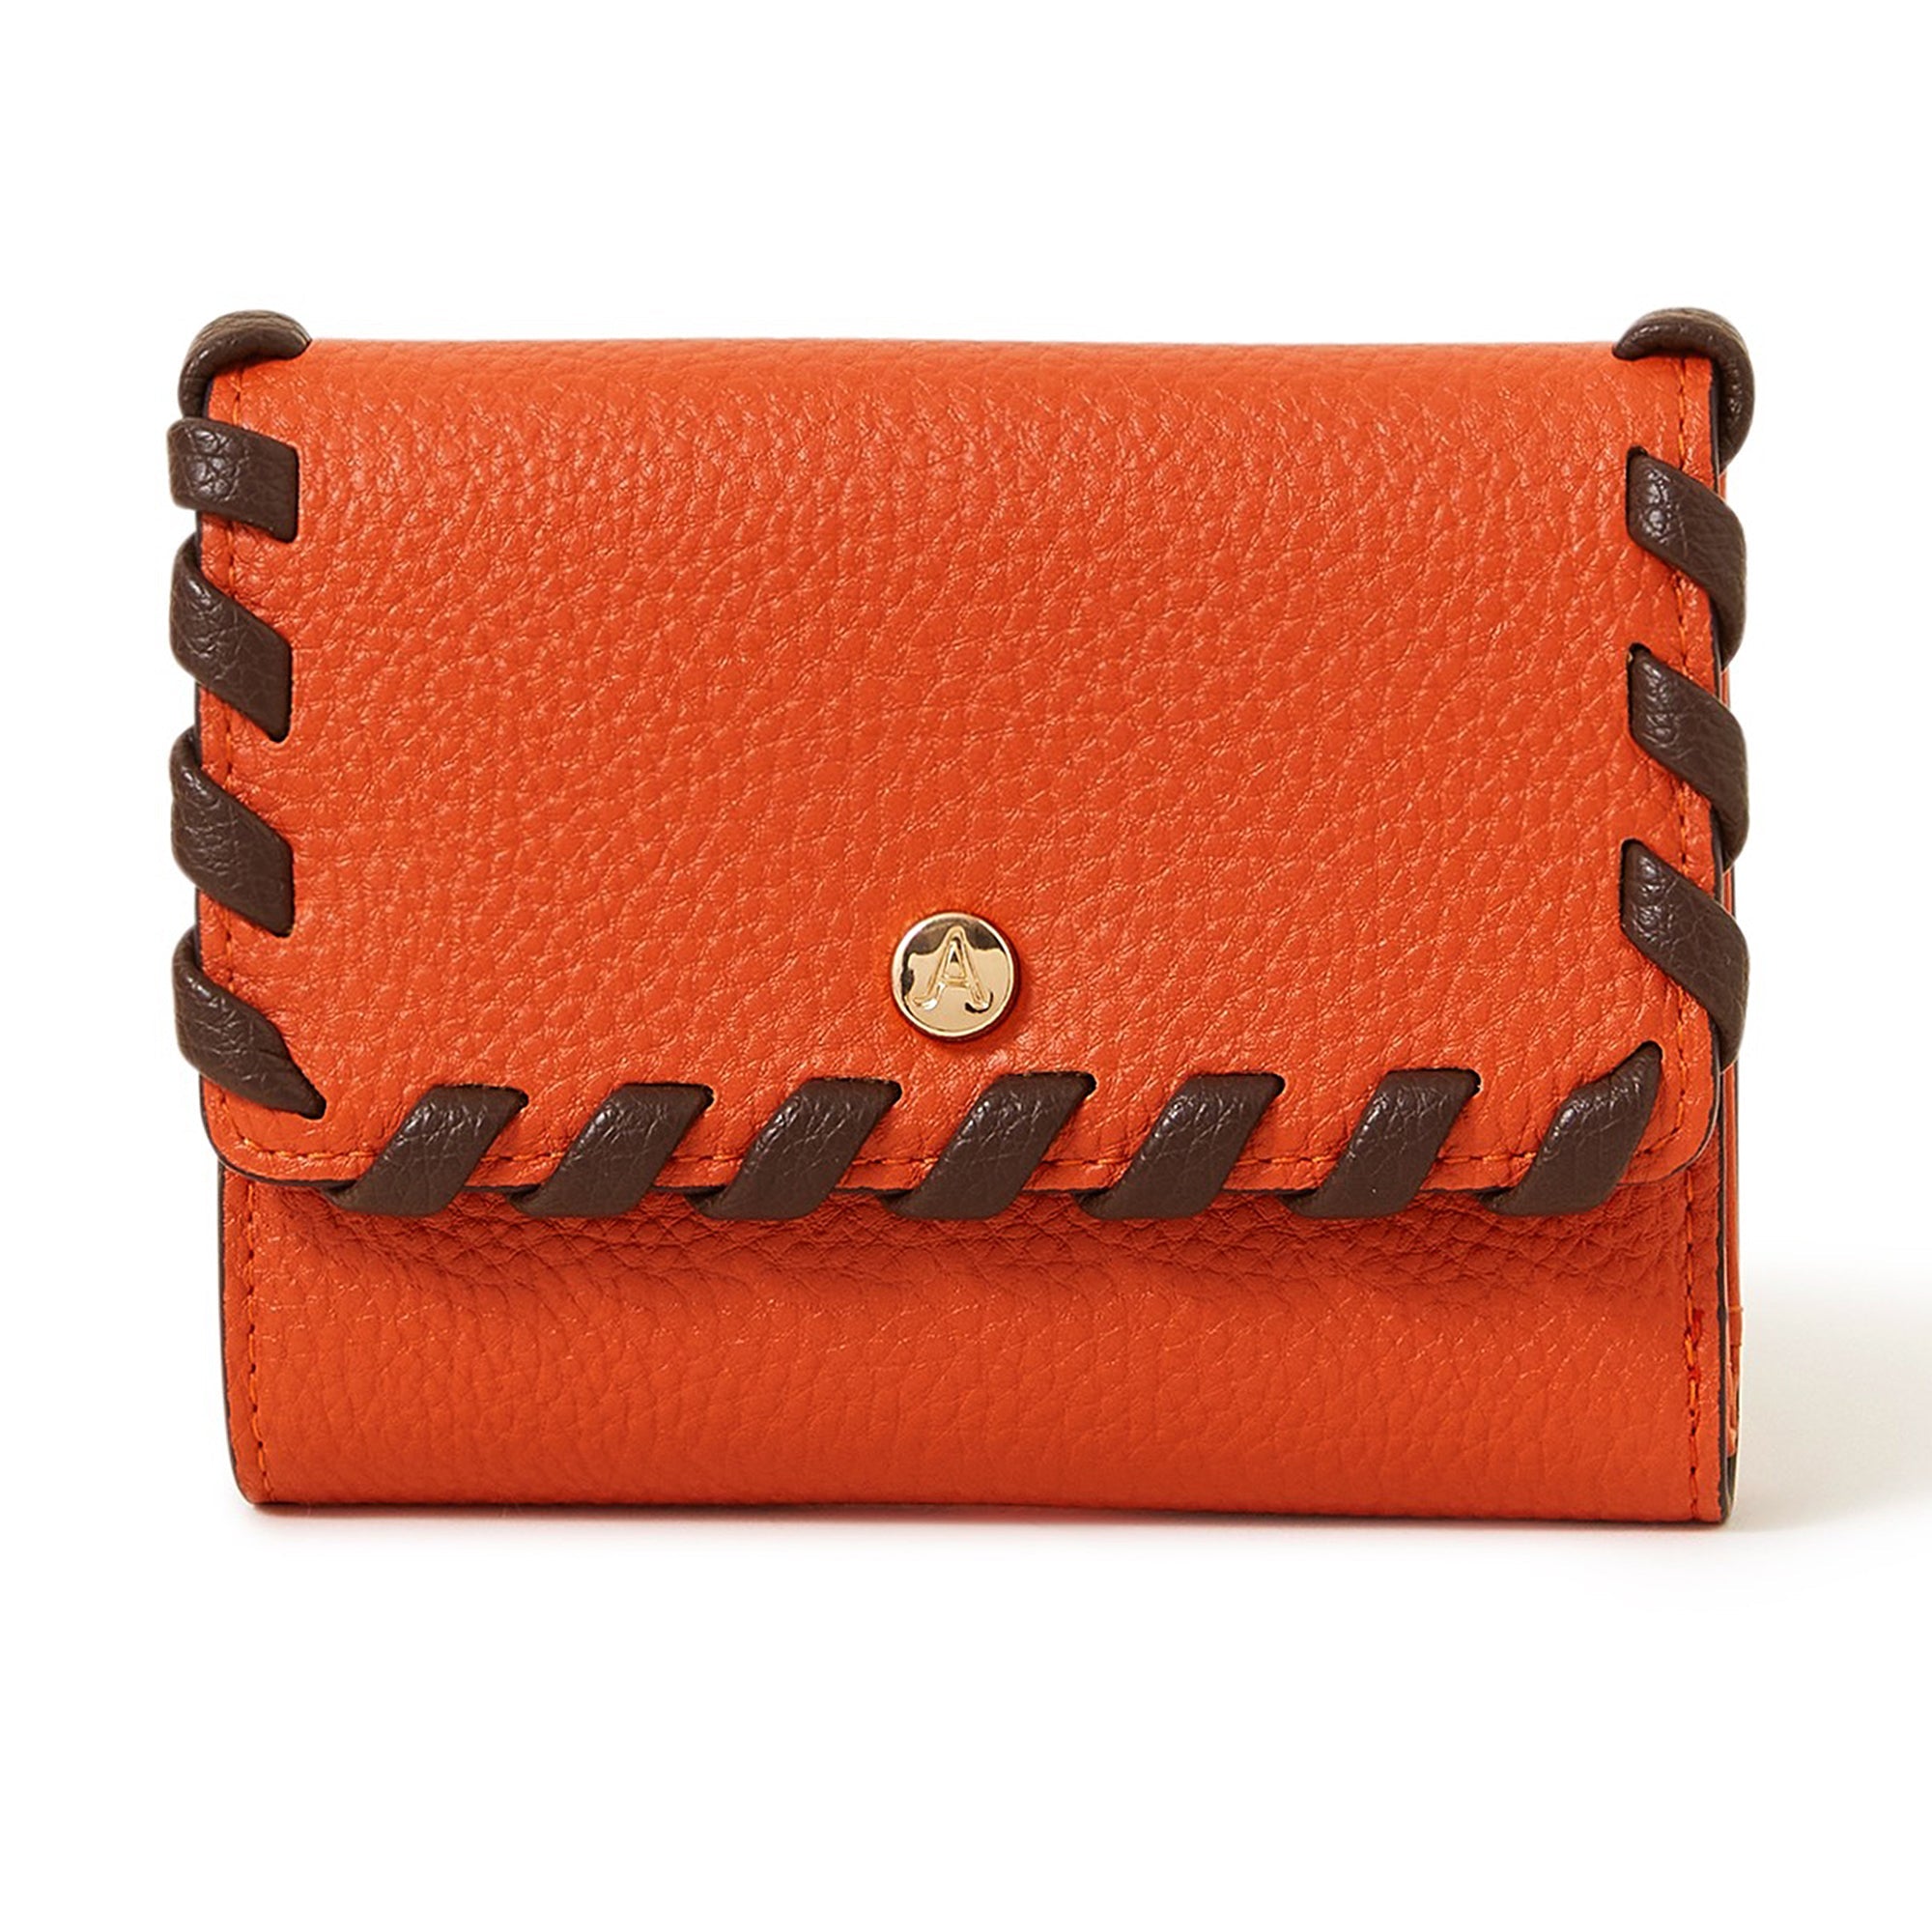 Accessorize London Women's Faux Leather Orange Whipstitch Purse